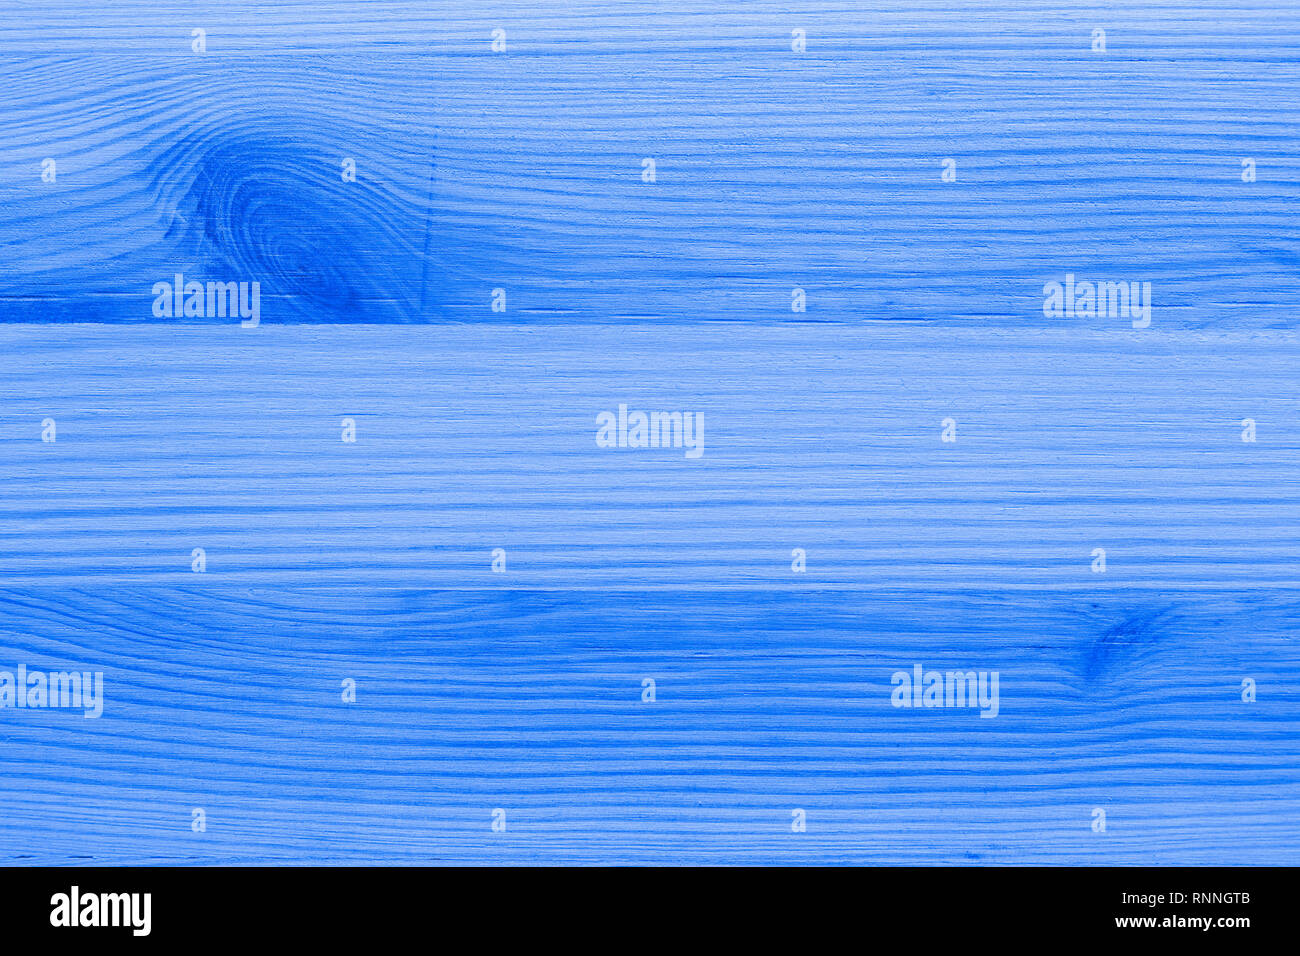 Pastellfarben Hell Blau Holzbrett Vollbild Bild Hintergrund Stockfotografie Alamy